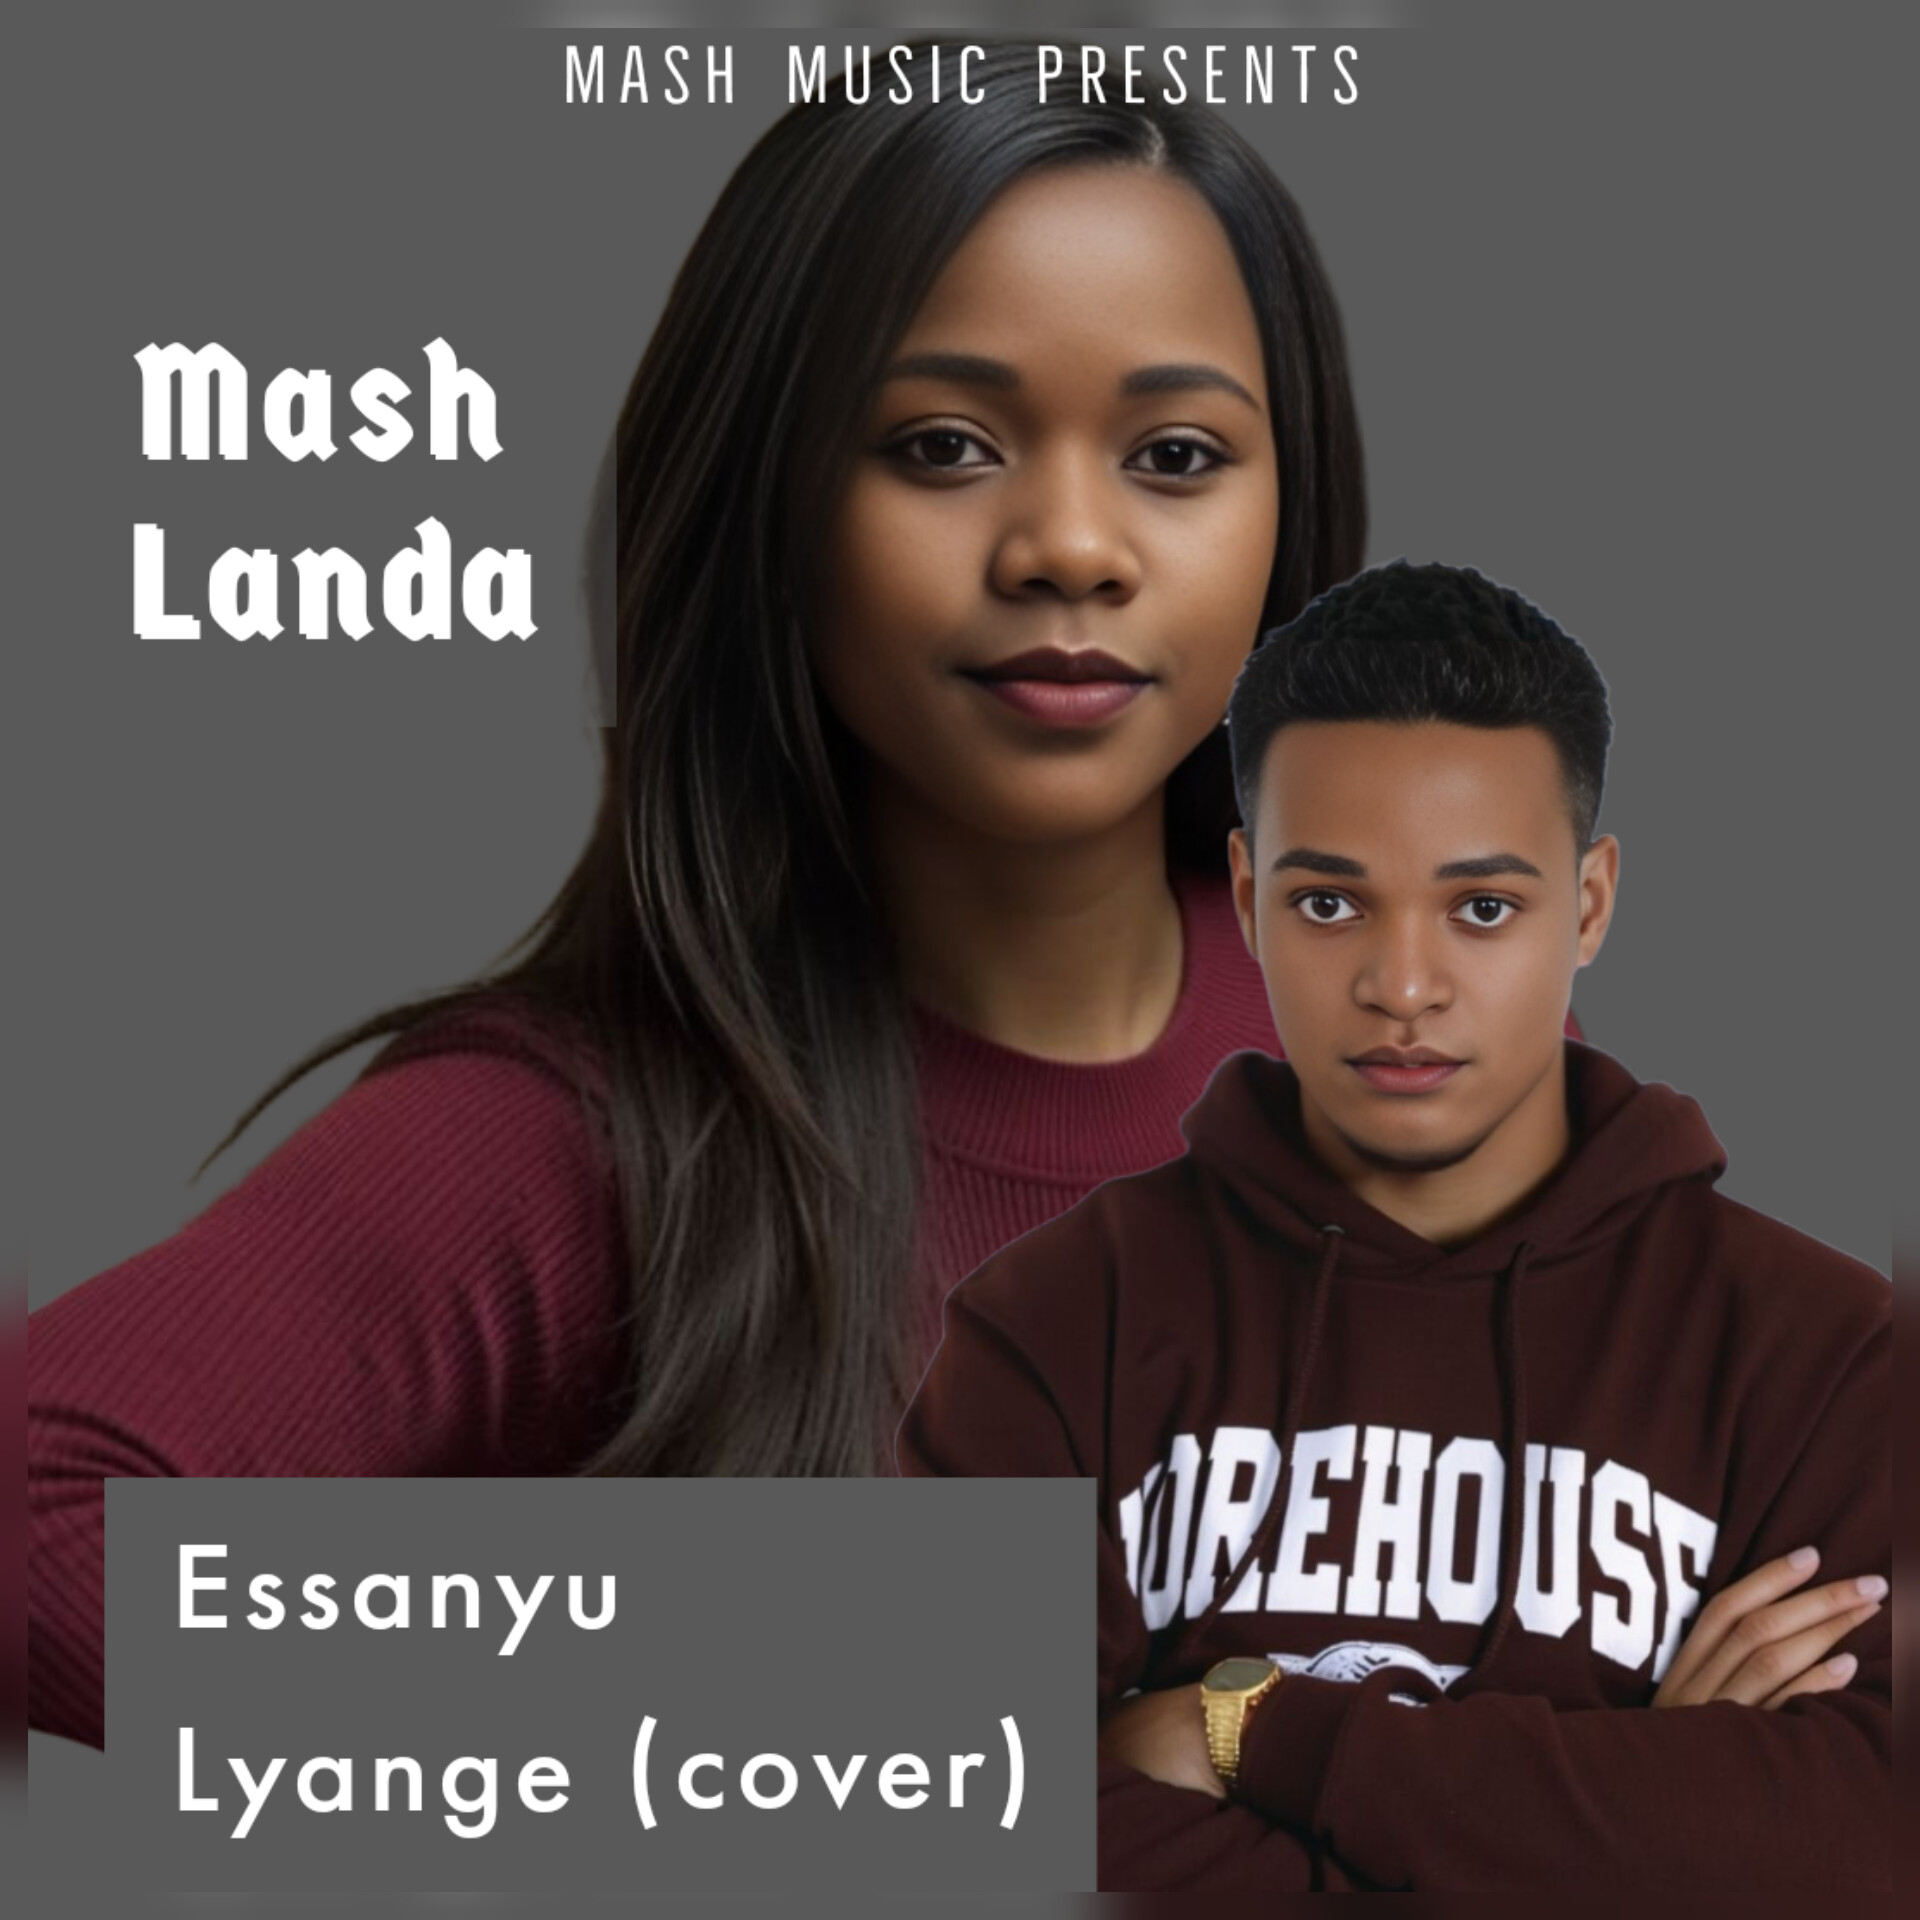 Essanyu Lyange (Cover, ft Lena)